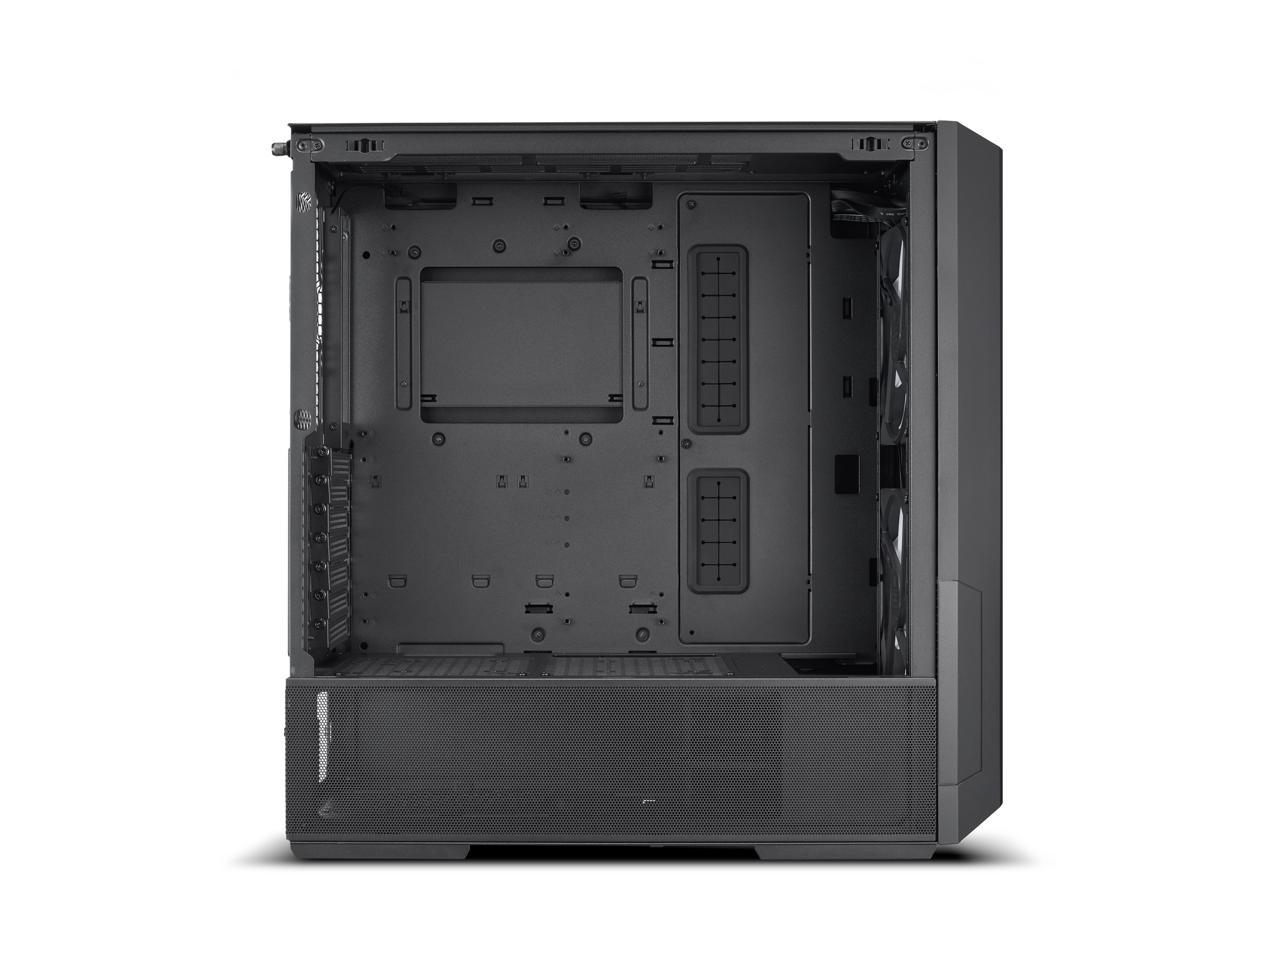 LIAN LI LANCOOL 216 X Black Steel / Tempered Glass ATX Mid Tower Computer Case ,2x 16 cm PWM Fans Included (Non RGB ) ----LANCOOL 216X